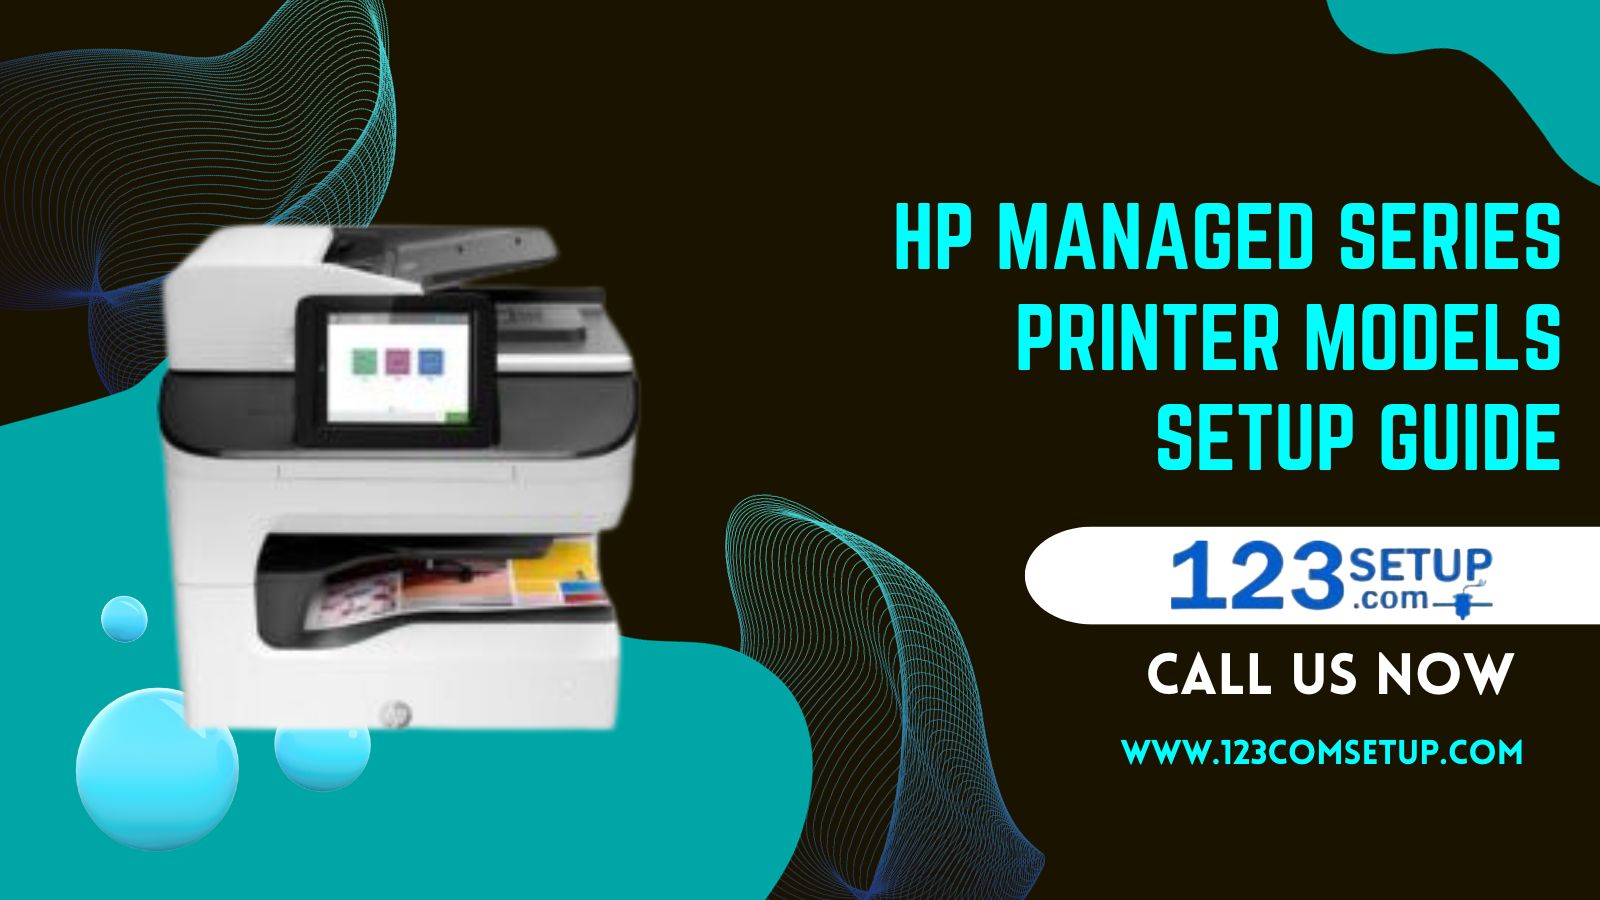 HP Managed Series Printer Models Setup - (+1) 000-000-0000